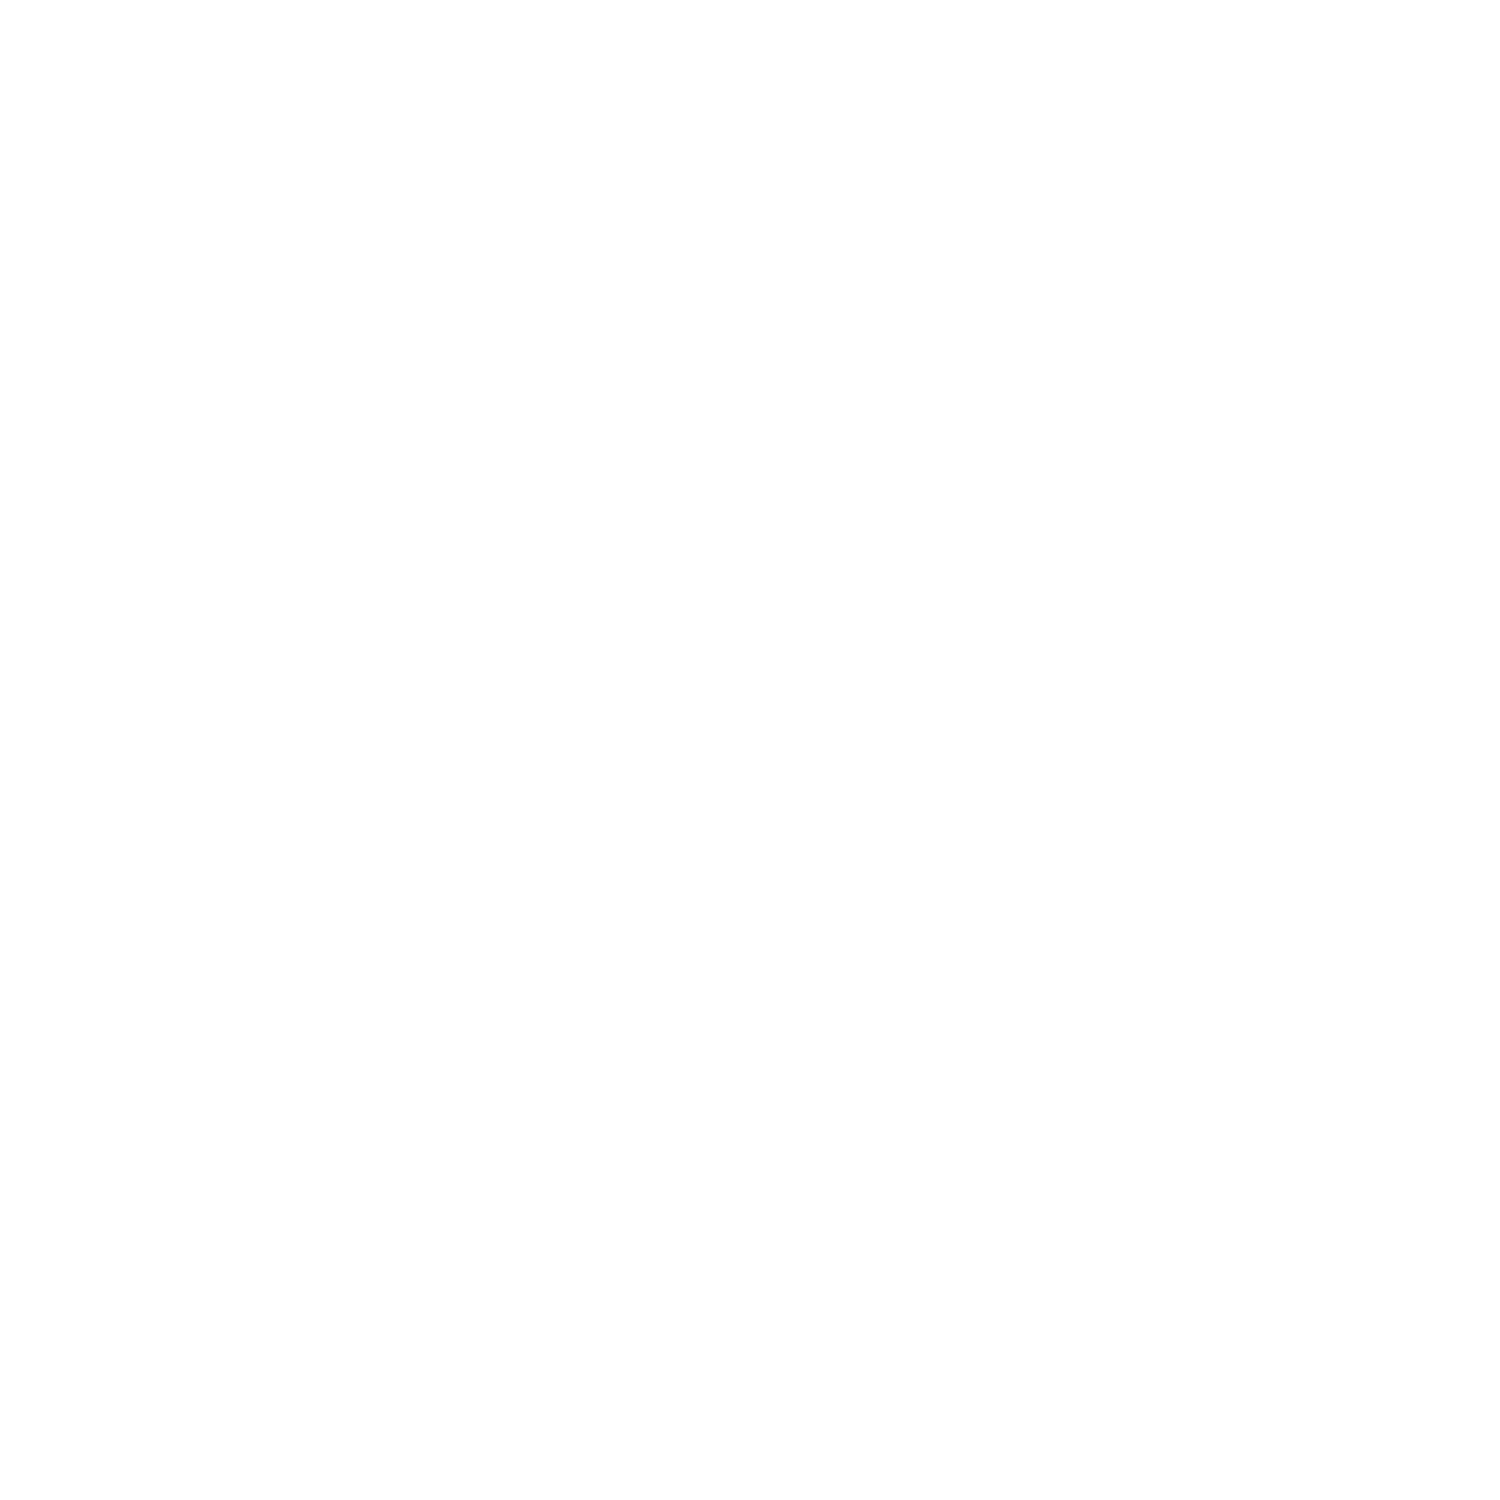 Rocket Tree Audio